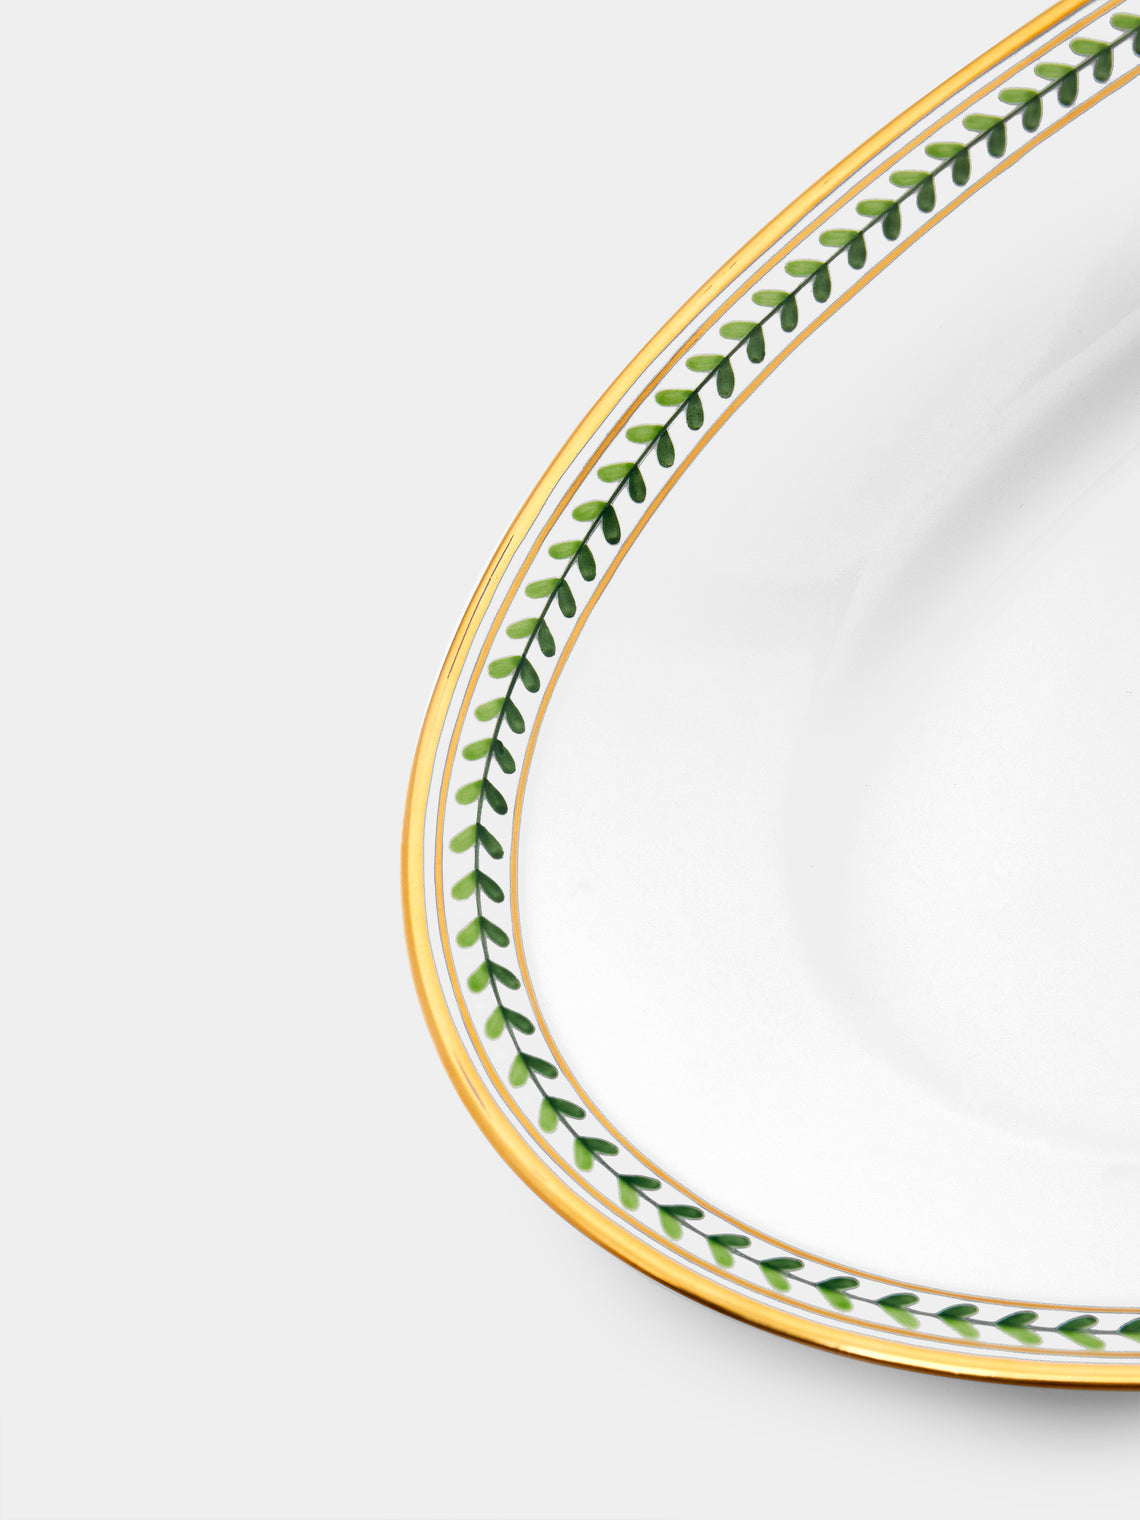 Augarten - Leafed Edge Hand-Painted Porcelain Large Serving Platter - White - ABASK